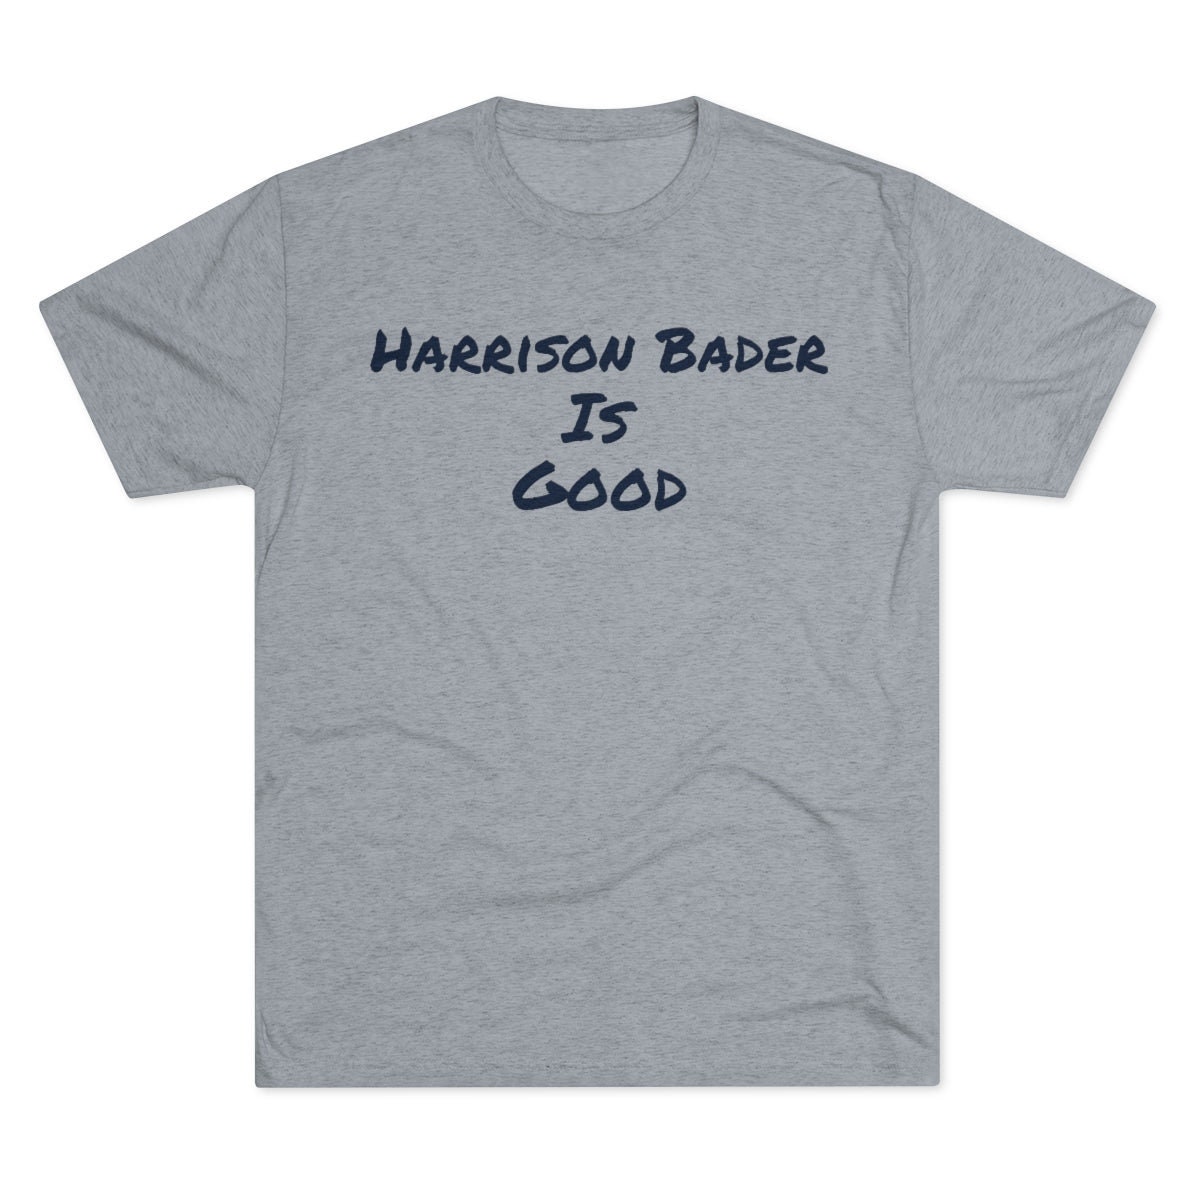 Harrison Bader Shirt Vintage Tshirt Vintage Unisex 90's 